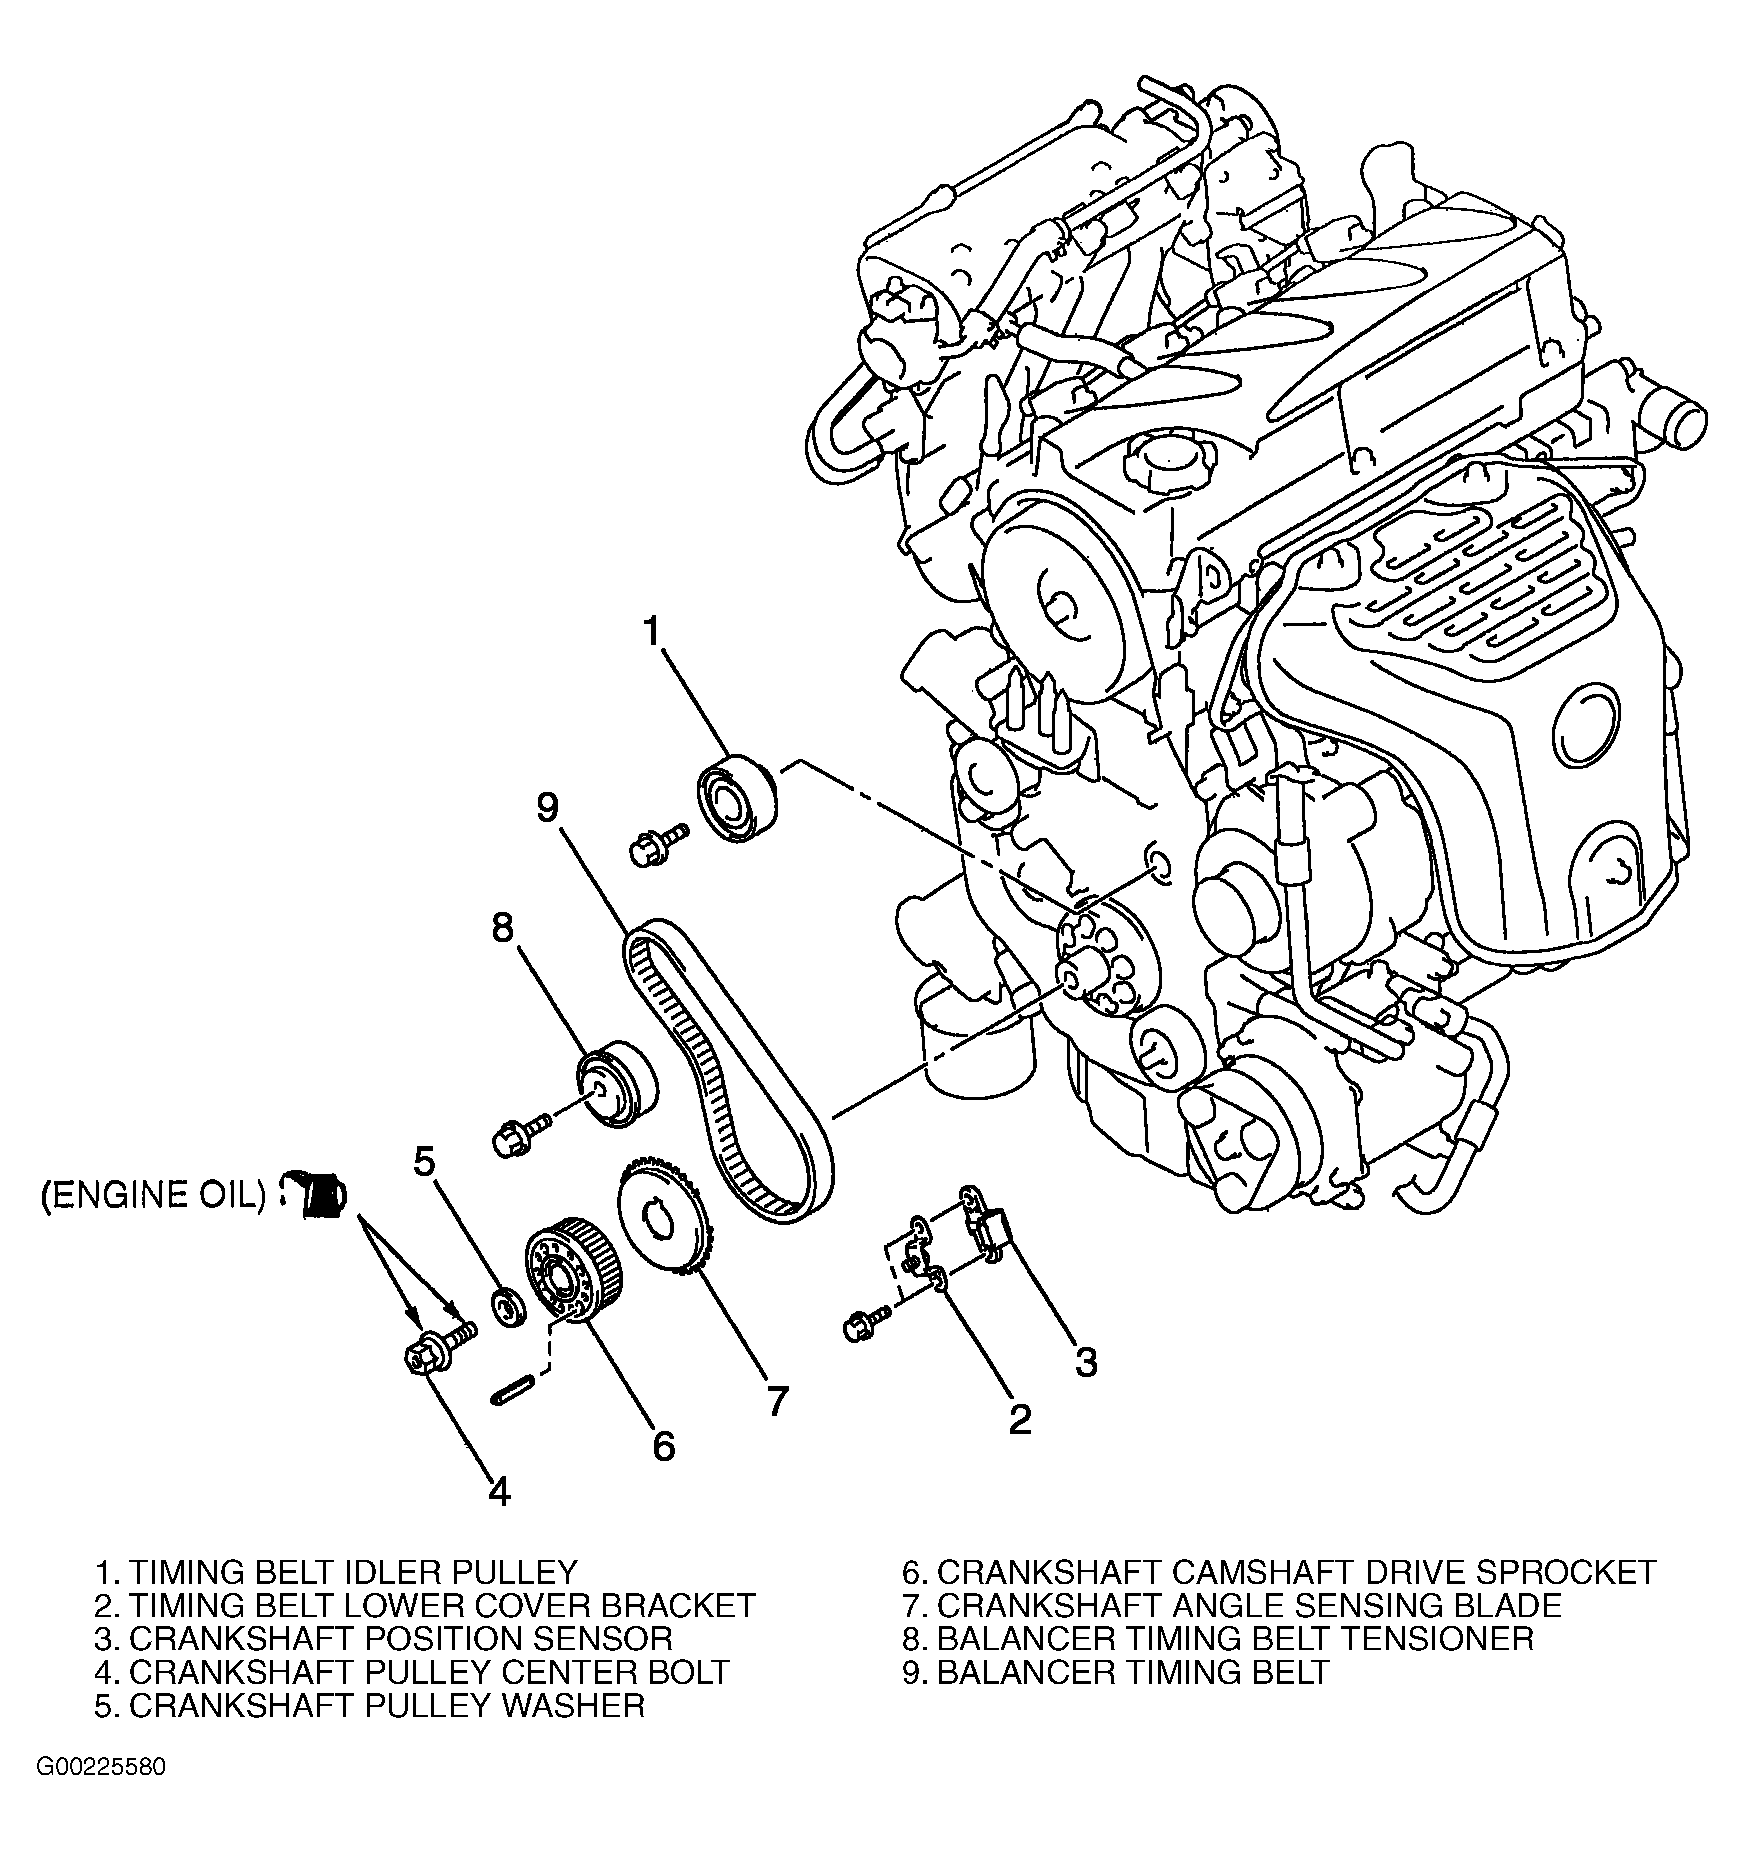 2004 Mitsubishi Galant Serpentine Belt Routing and Timing Belt Diagrams